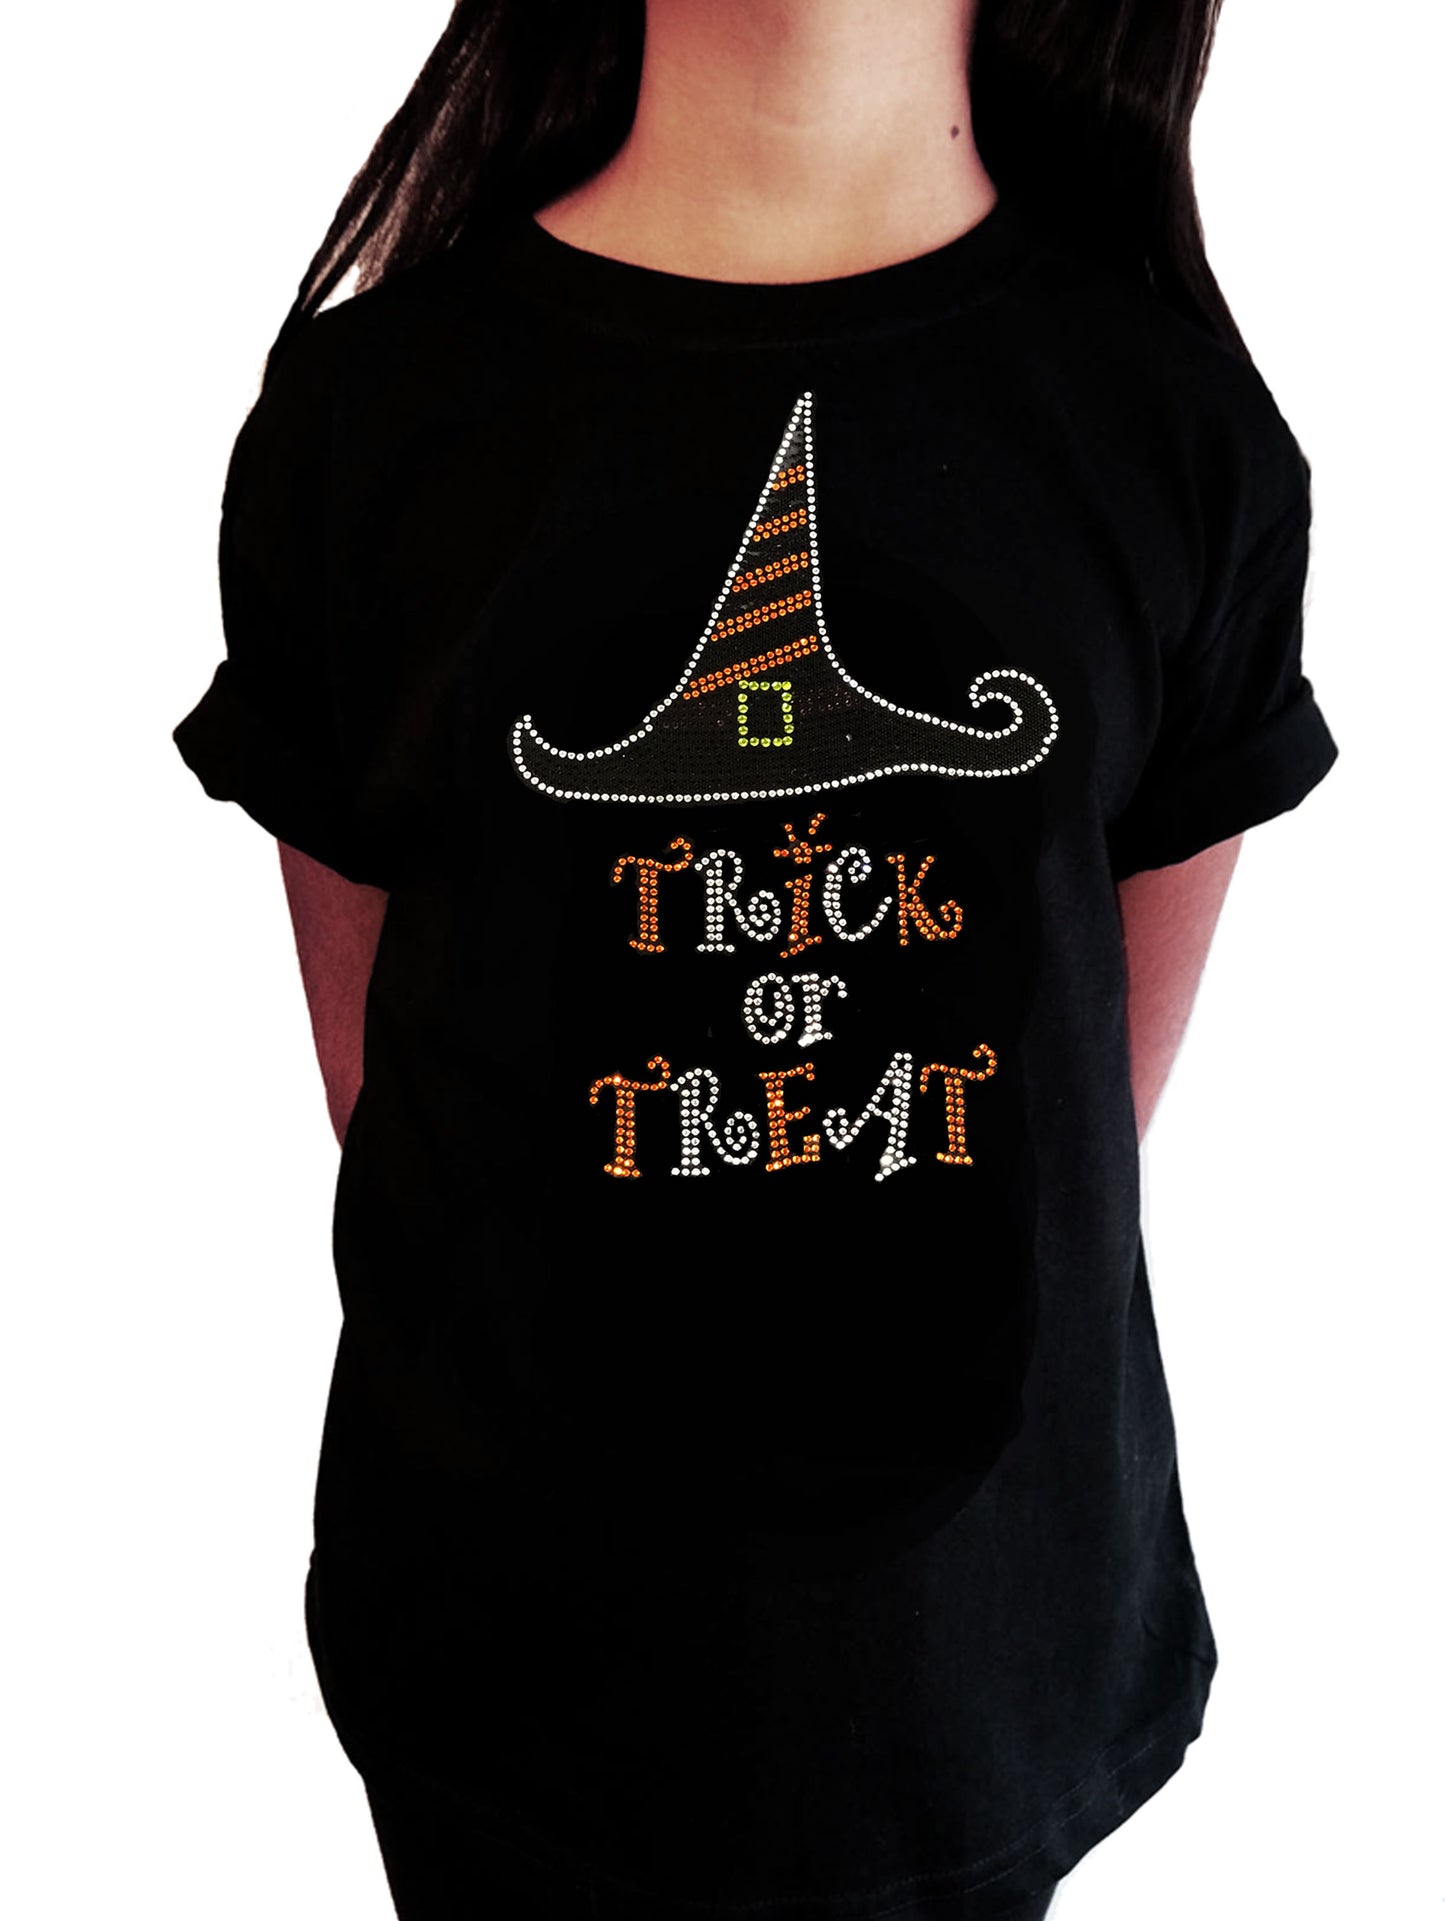 Girls Rhinestone T-Shirt " Trick or Treat - Witch Hat Halloween in Rhinestones "